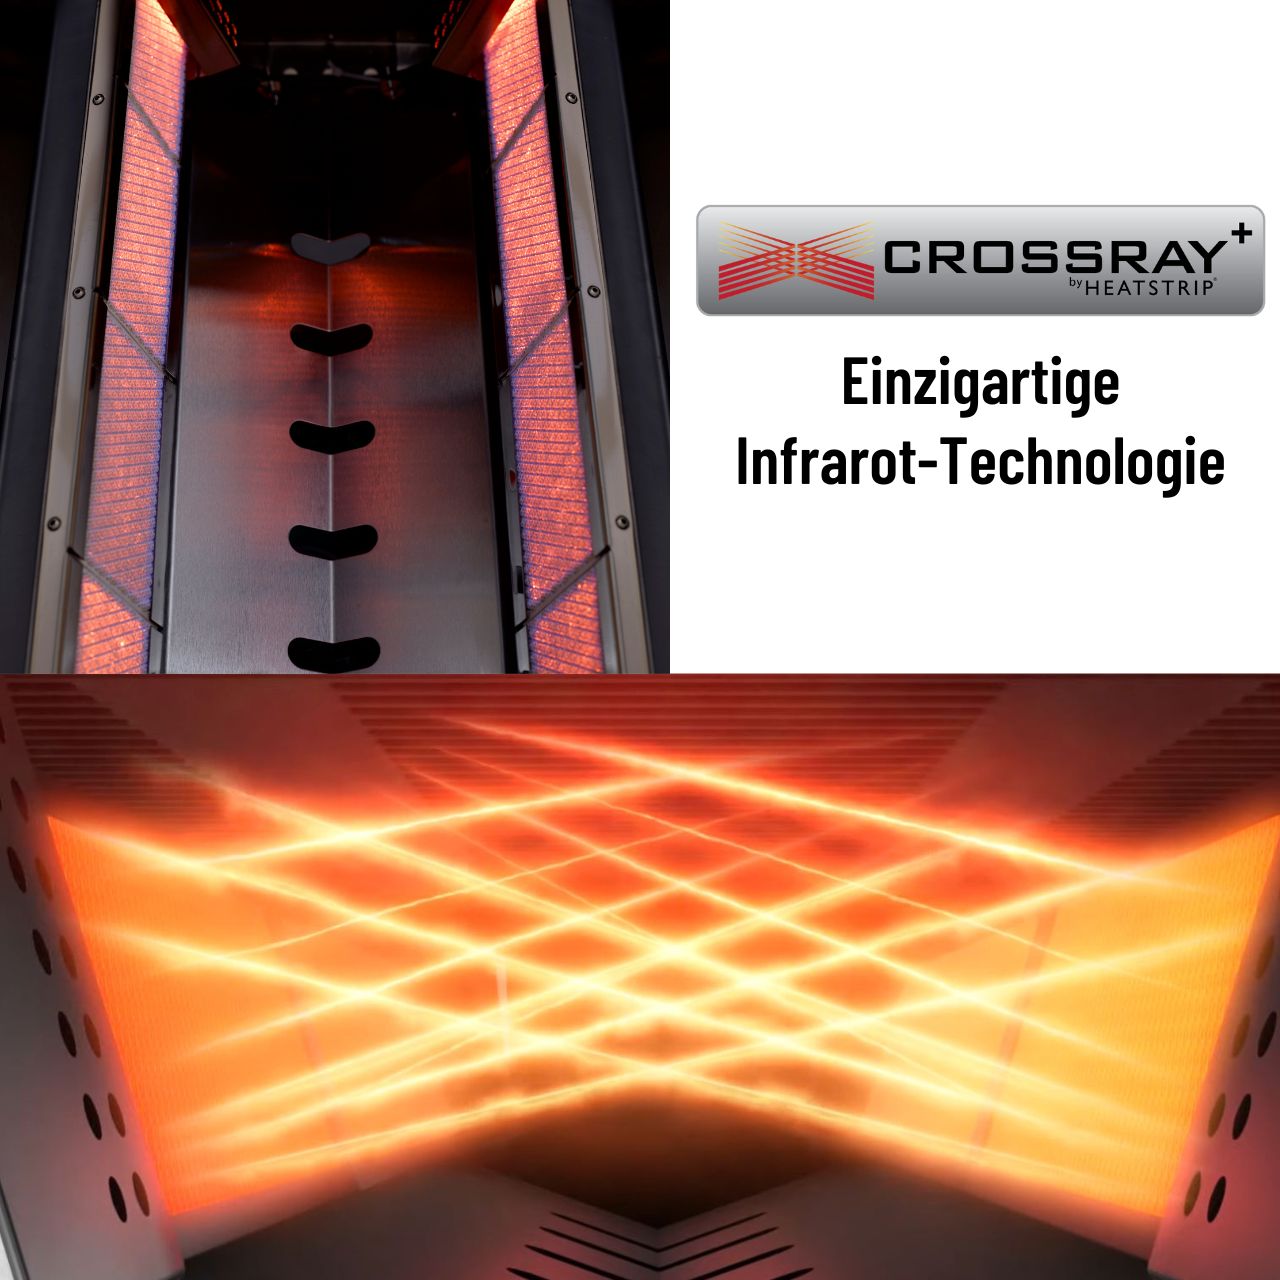 Crossray+ Built In, 2 Infrarot-Keramikbrenner, 55 x 40 cm Grillfläche, Gusseisenroste